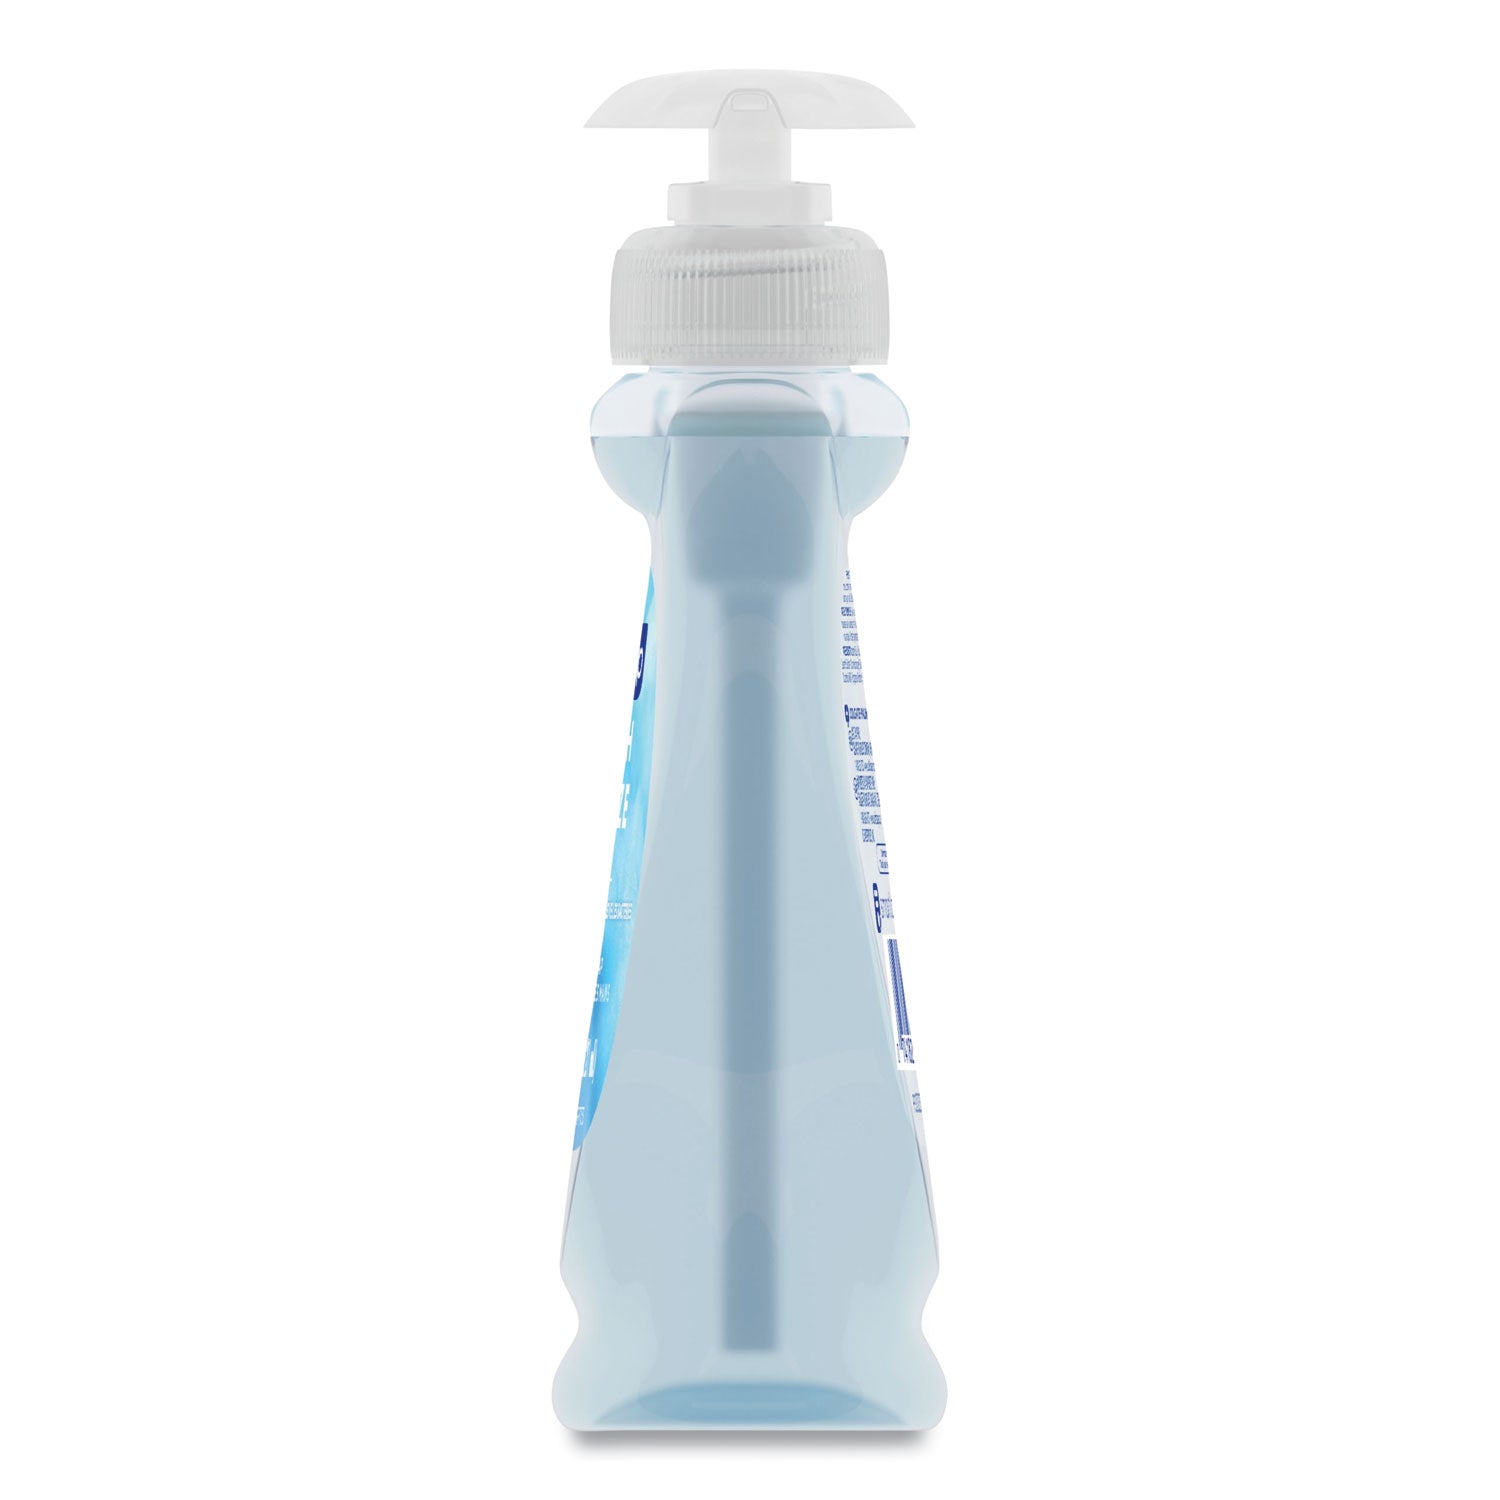 softsoap-liquid-hand-soap-pumps-fresh-breeze-75-oz-pump-bottle_cpcus04964ea - 6